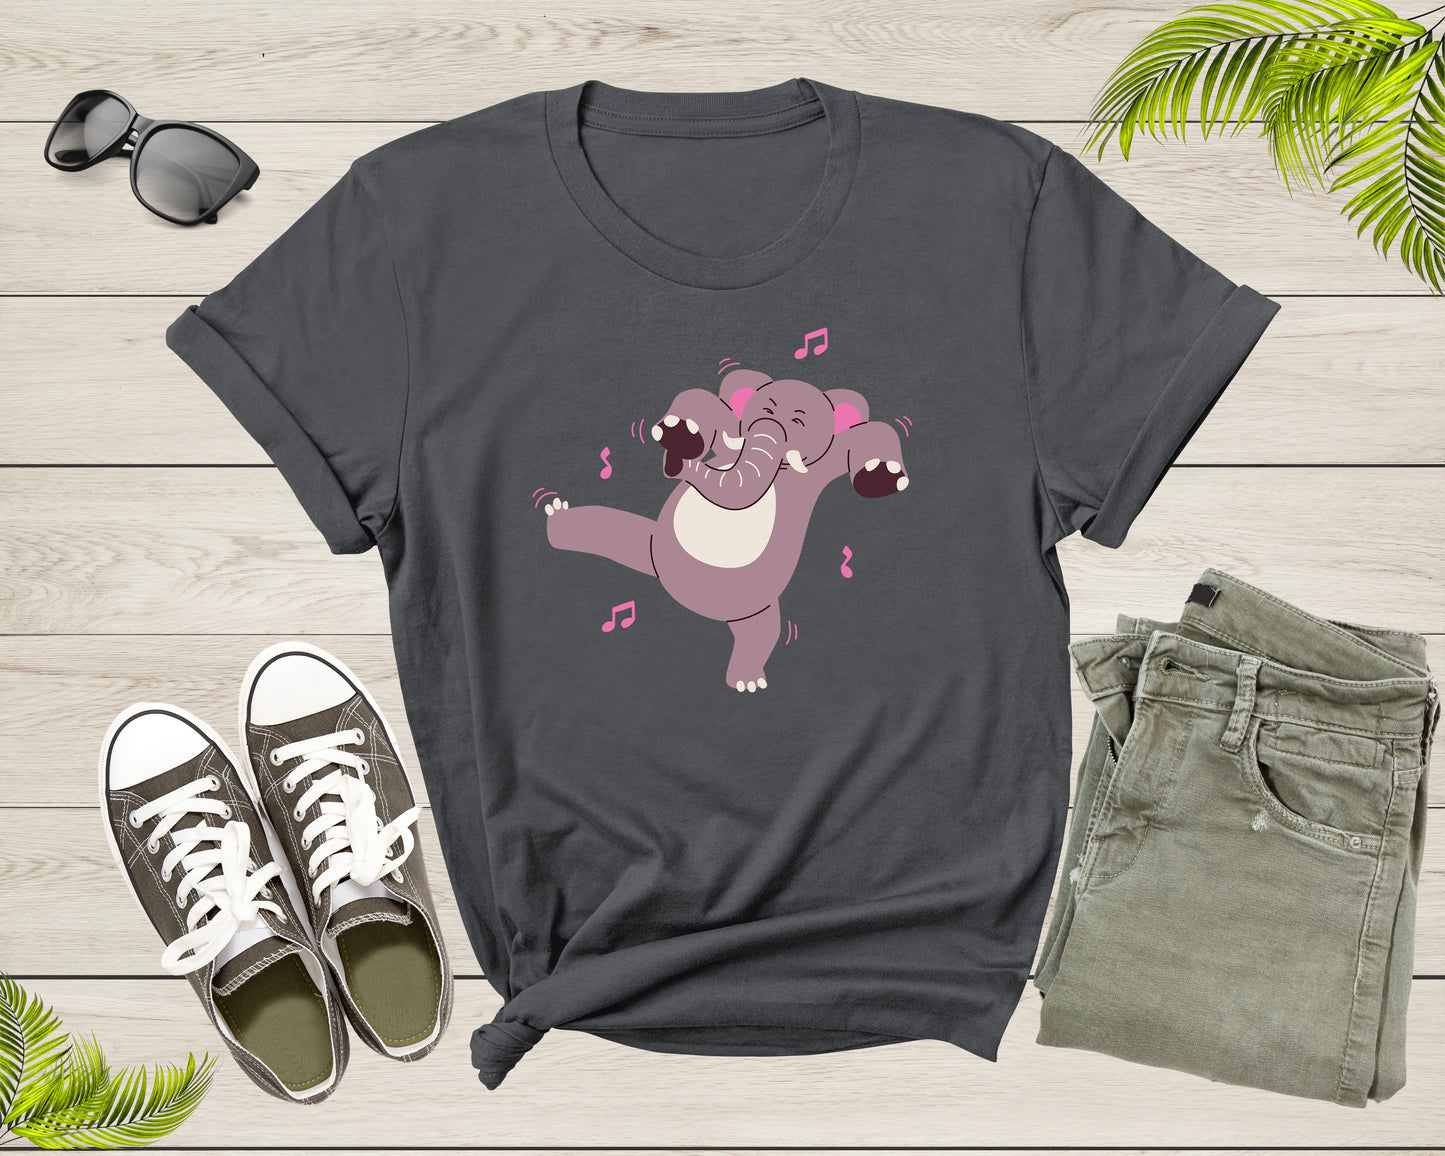 Funny Cute Dancing Elephant for Men Women Kids Boys Girls T-Shirt Elephant Lover Gift T Shirt for Men Women Kids Boys Girls Graphic Tshirt